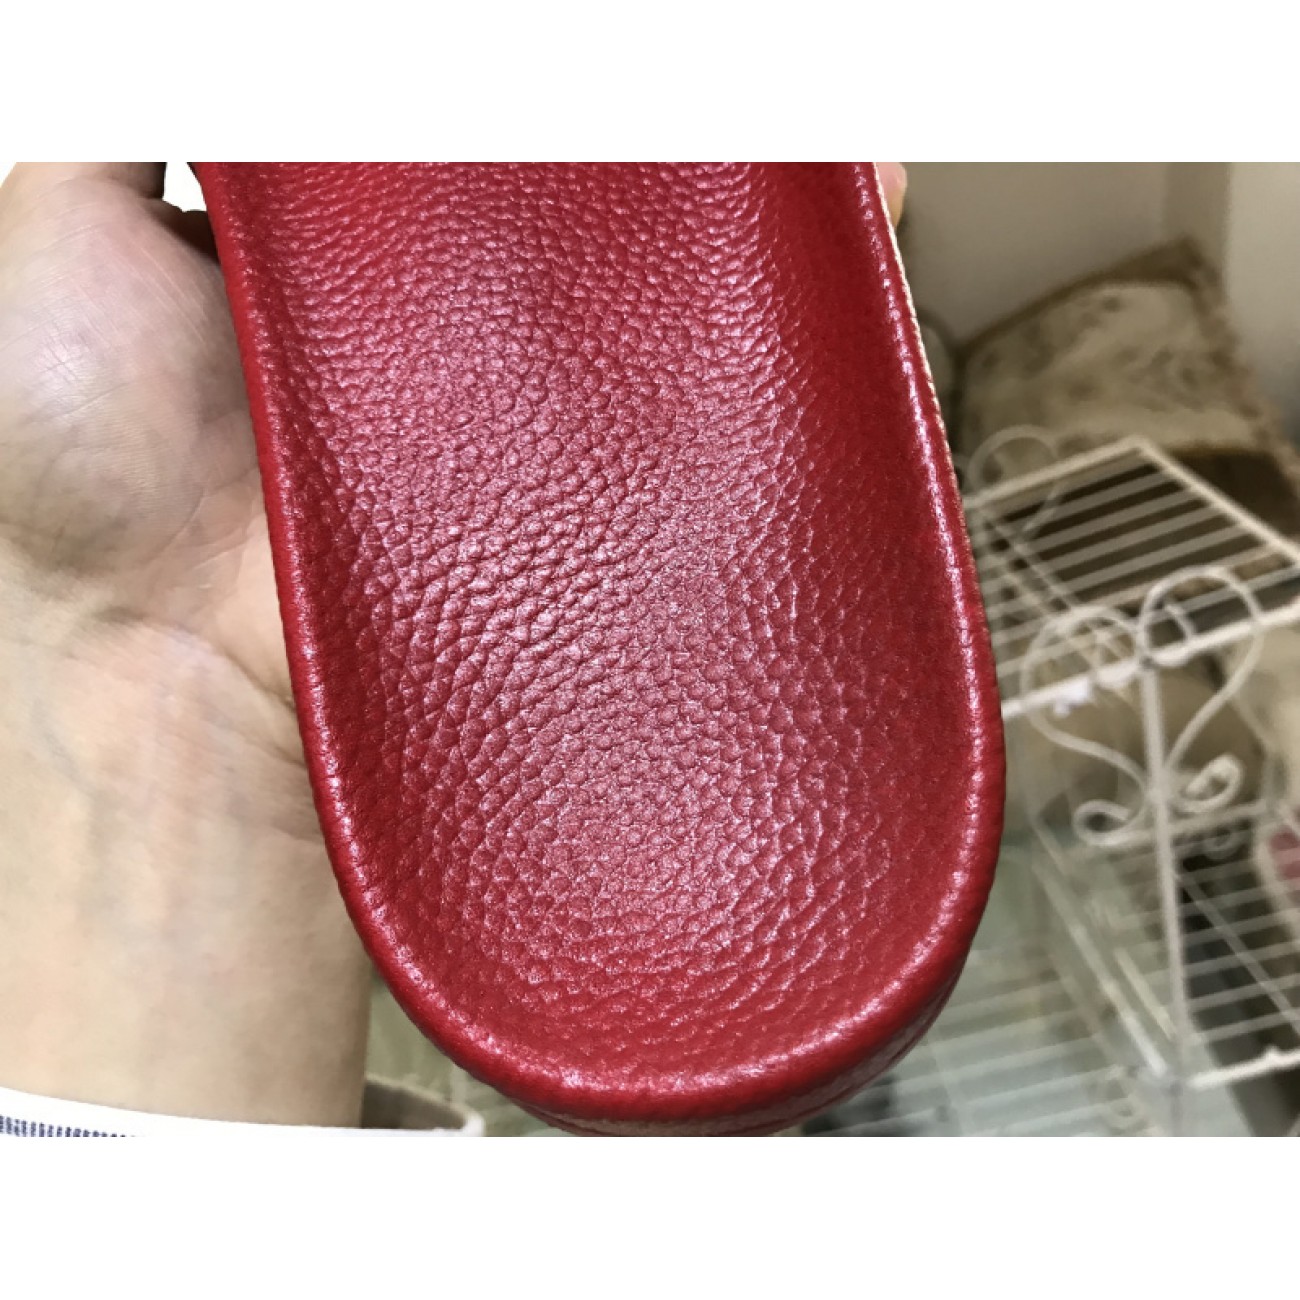 Supreme Suprize Design 2018ss Red White Slippers